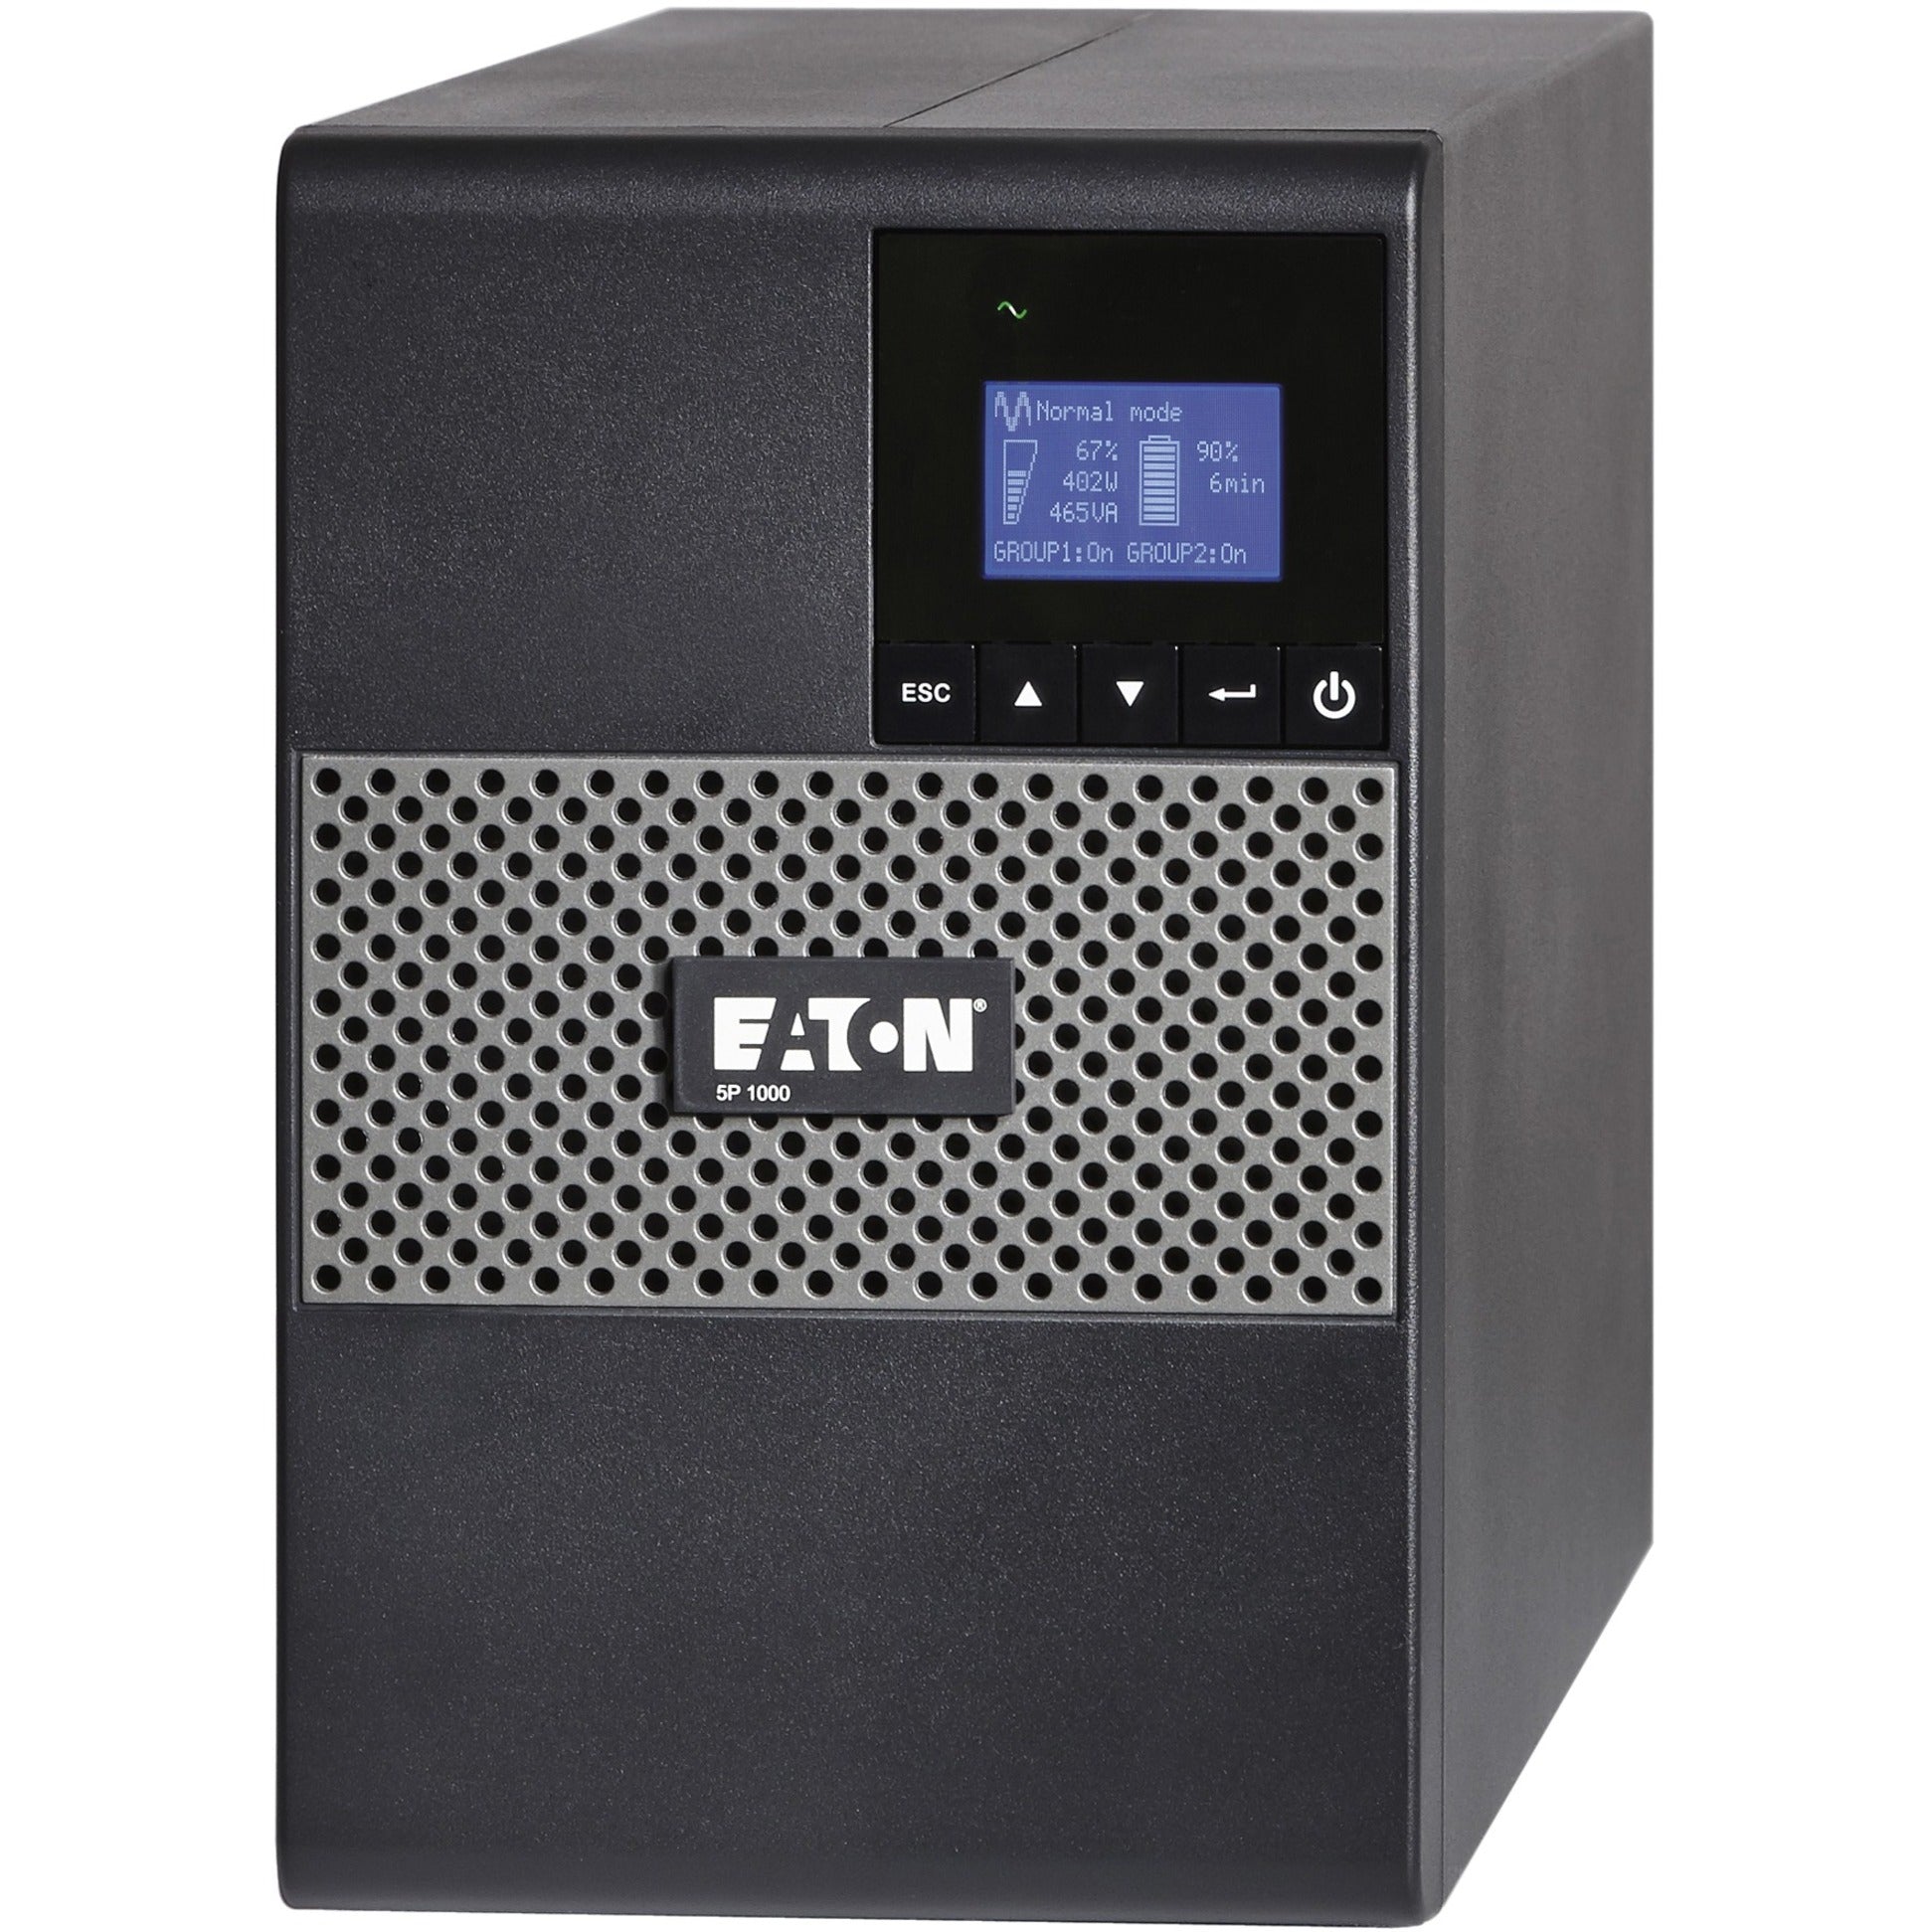 Eaton 5P UPS 5P1000 1000VA 770W Line-Interactive UPS, 8 Outlets, True Sine Wave, Energy Star, USB & Network Ports